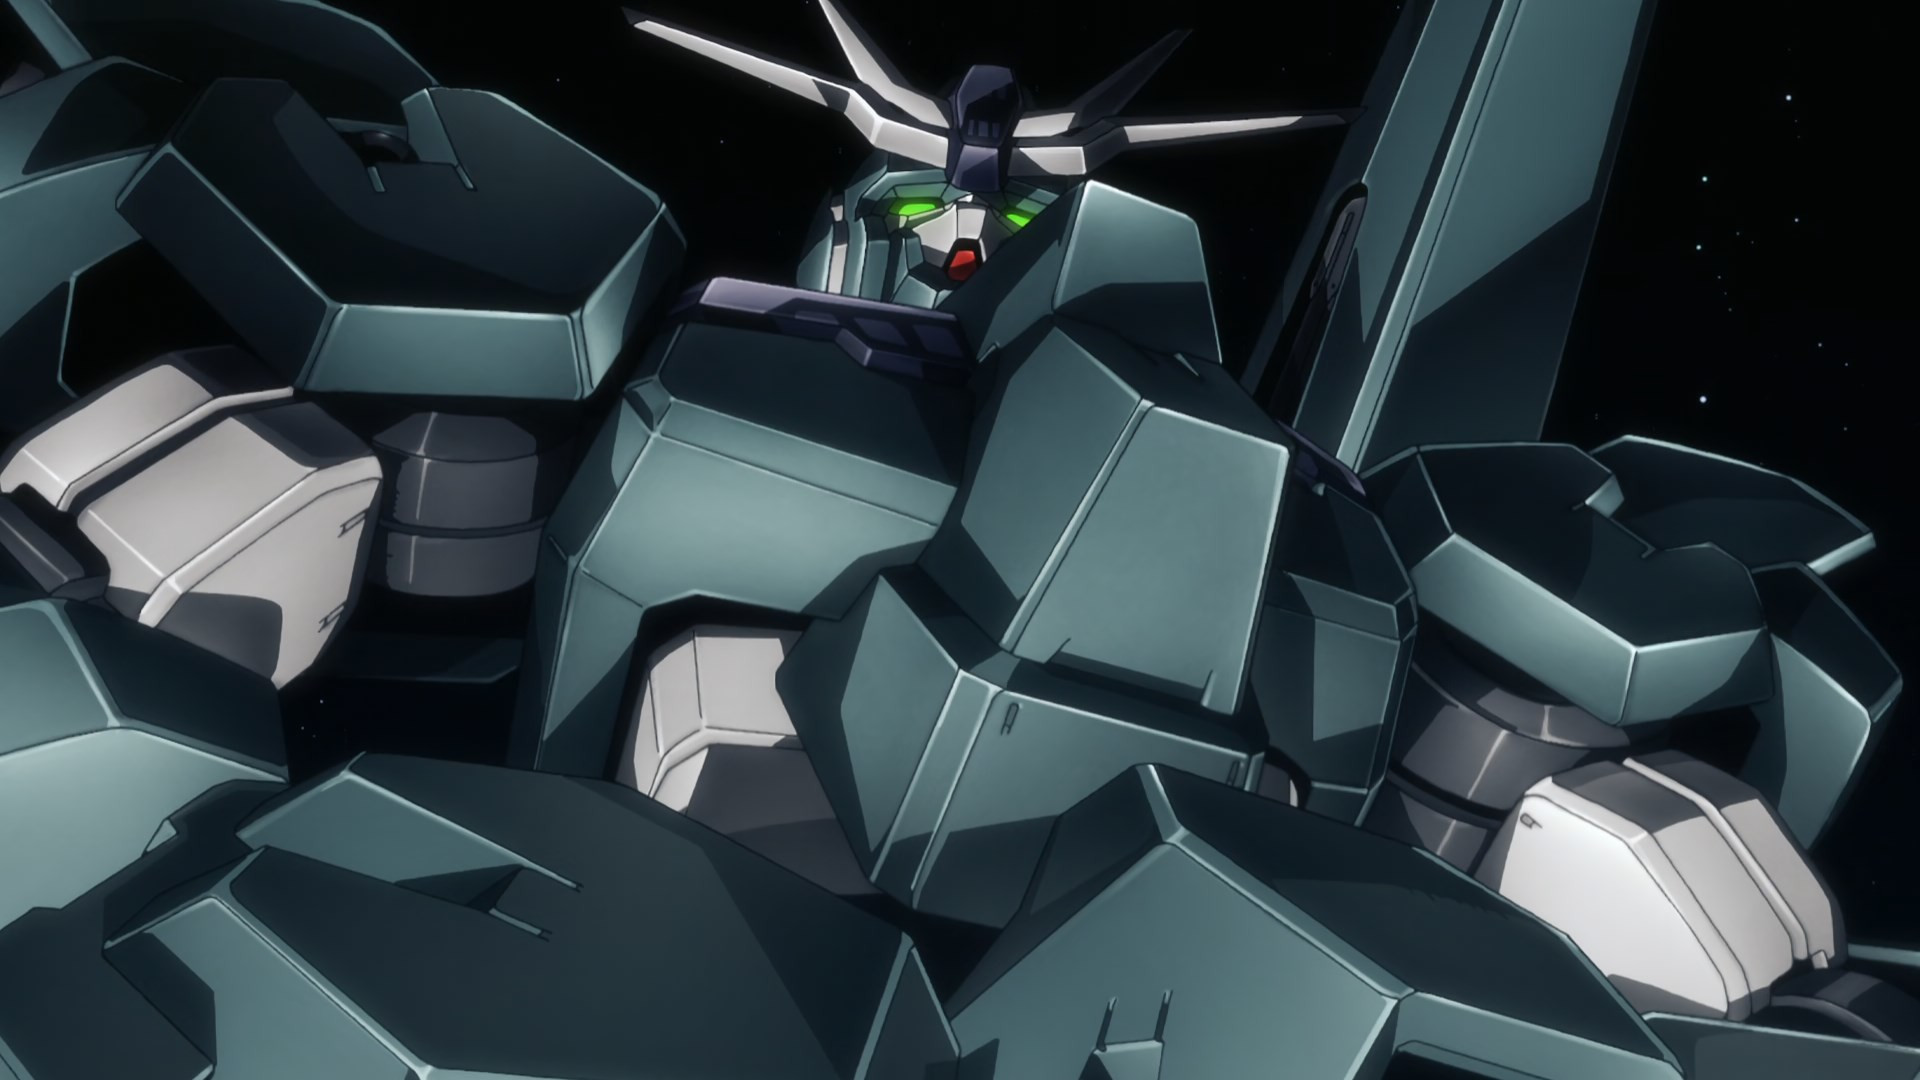 Mobile Suit Gundam: The Witch from Mercury: Episódio 12 – Se fugir